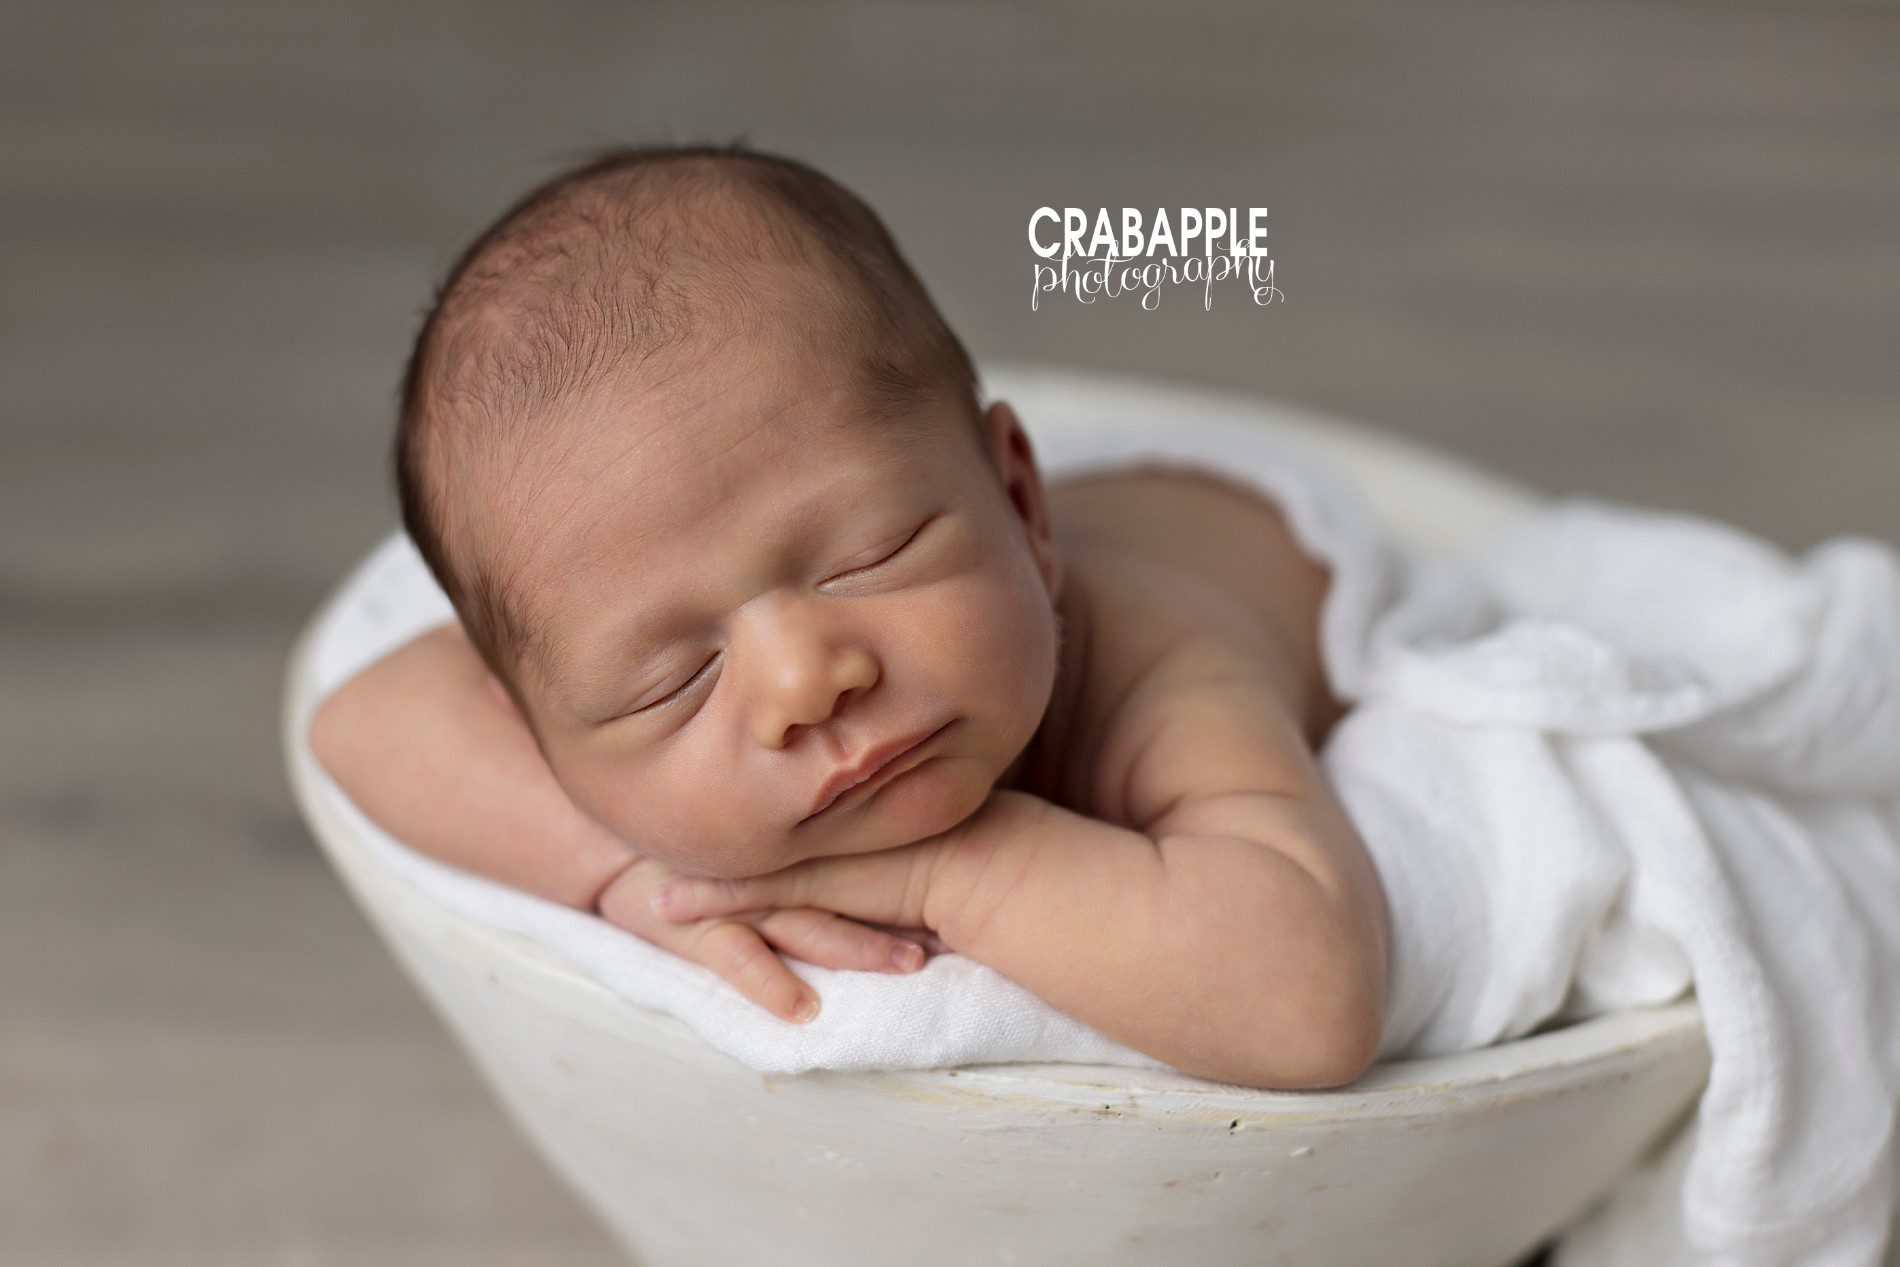 pose ideas for newborn photos using props